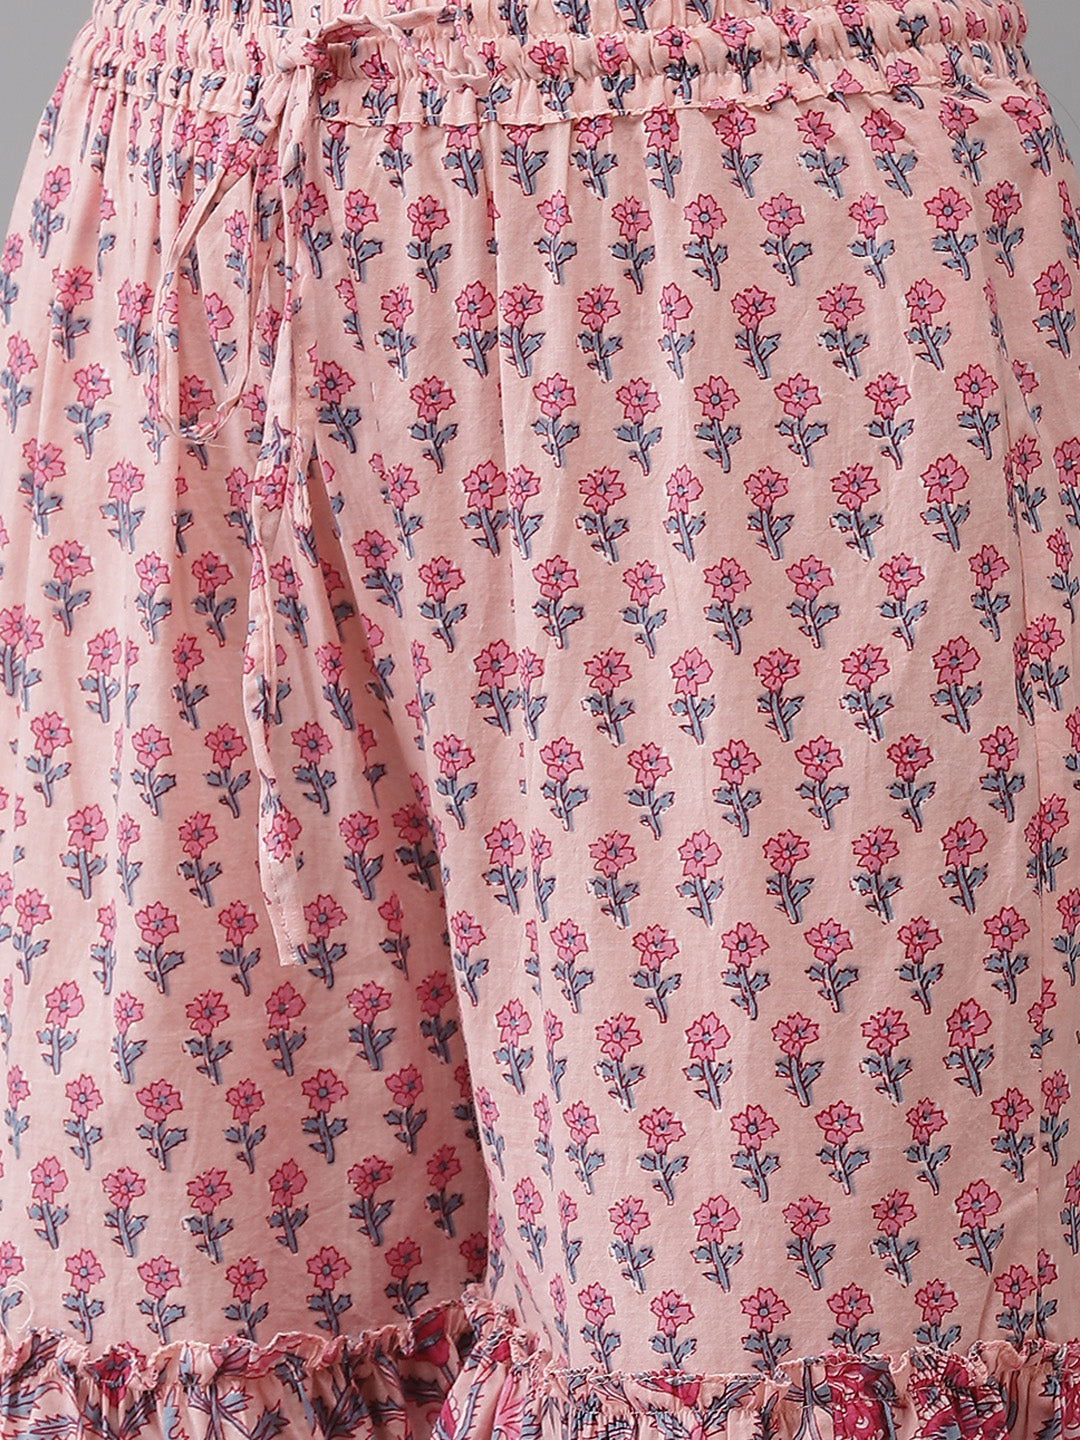 Ishin Women's Cotton Blend Pink Embroidered A-Line Kurta Sharara Dupatta Set